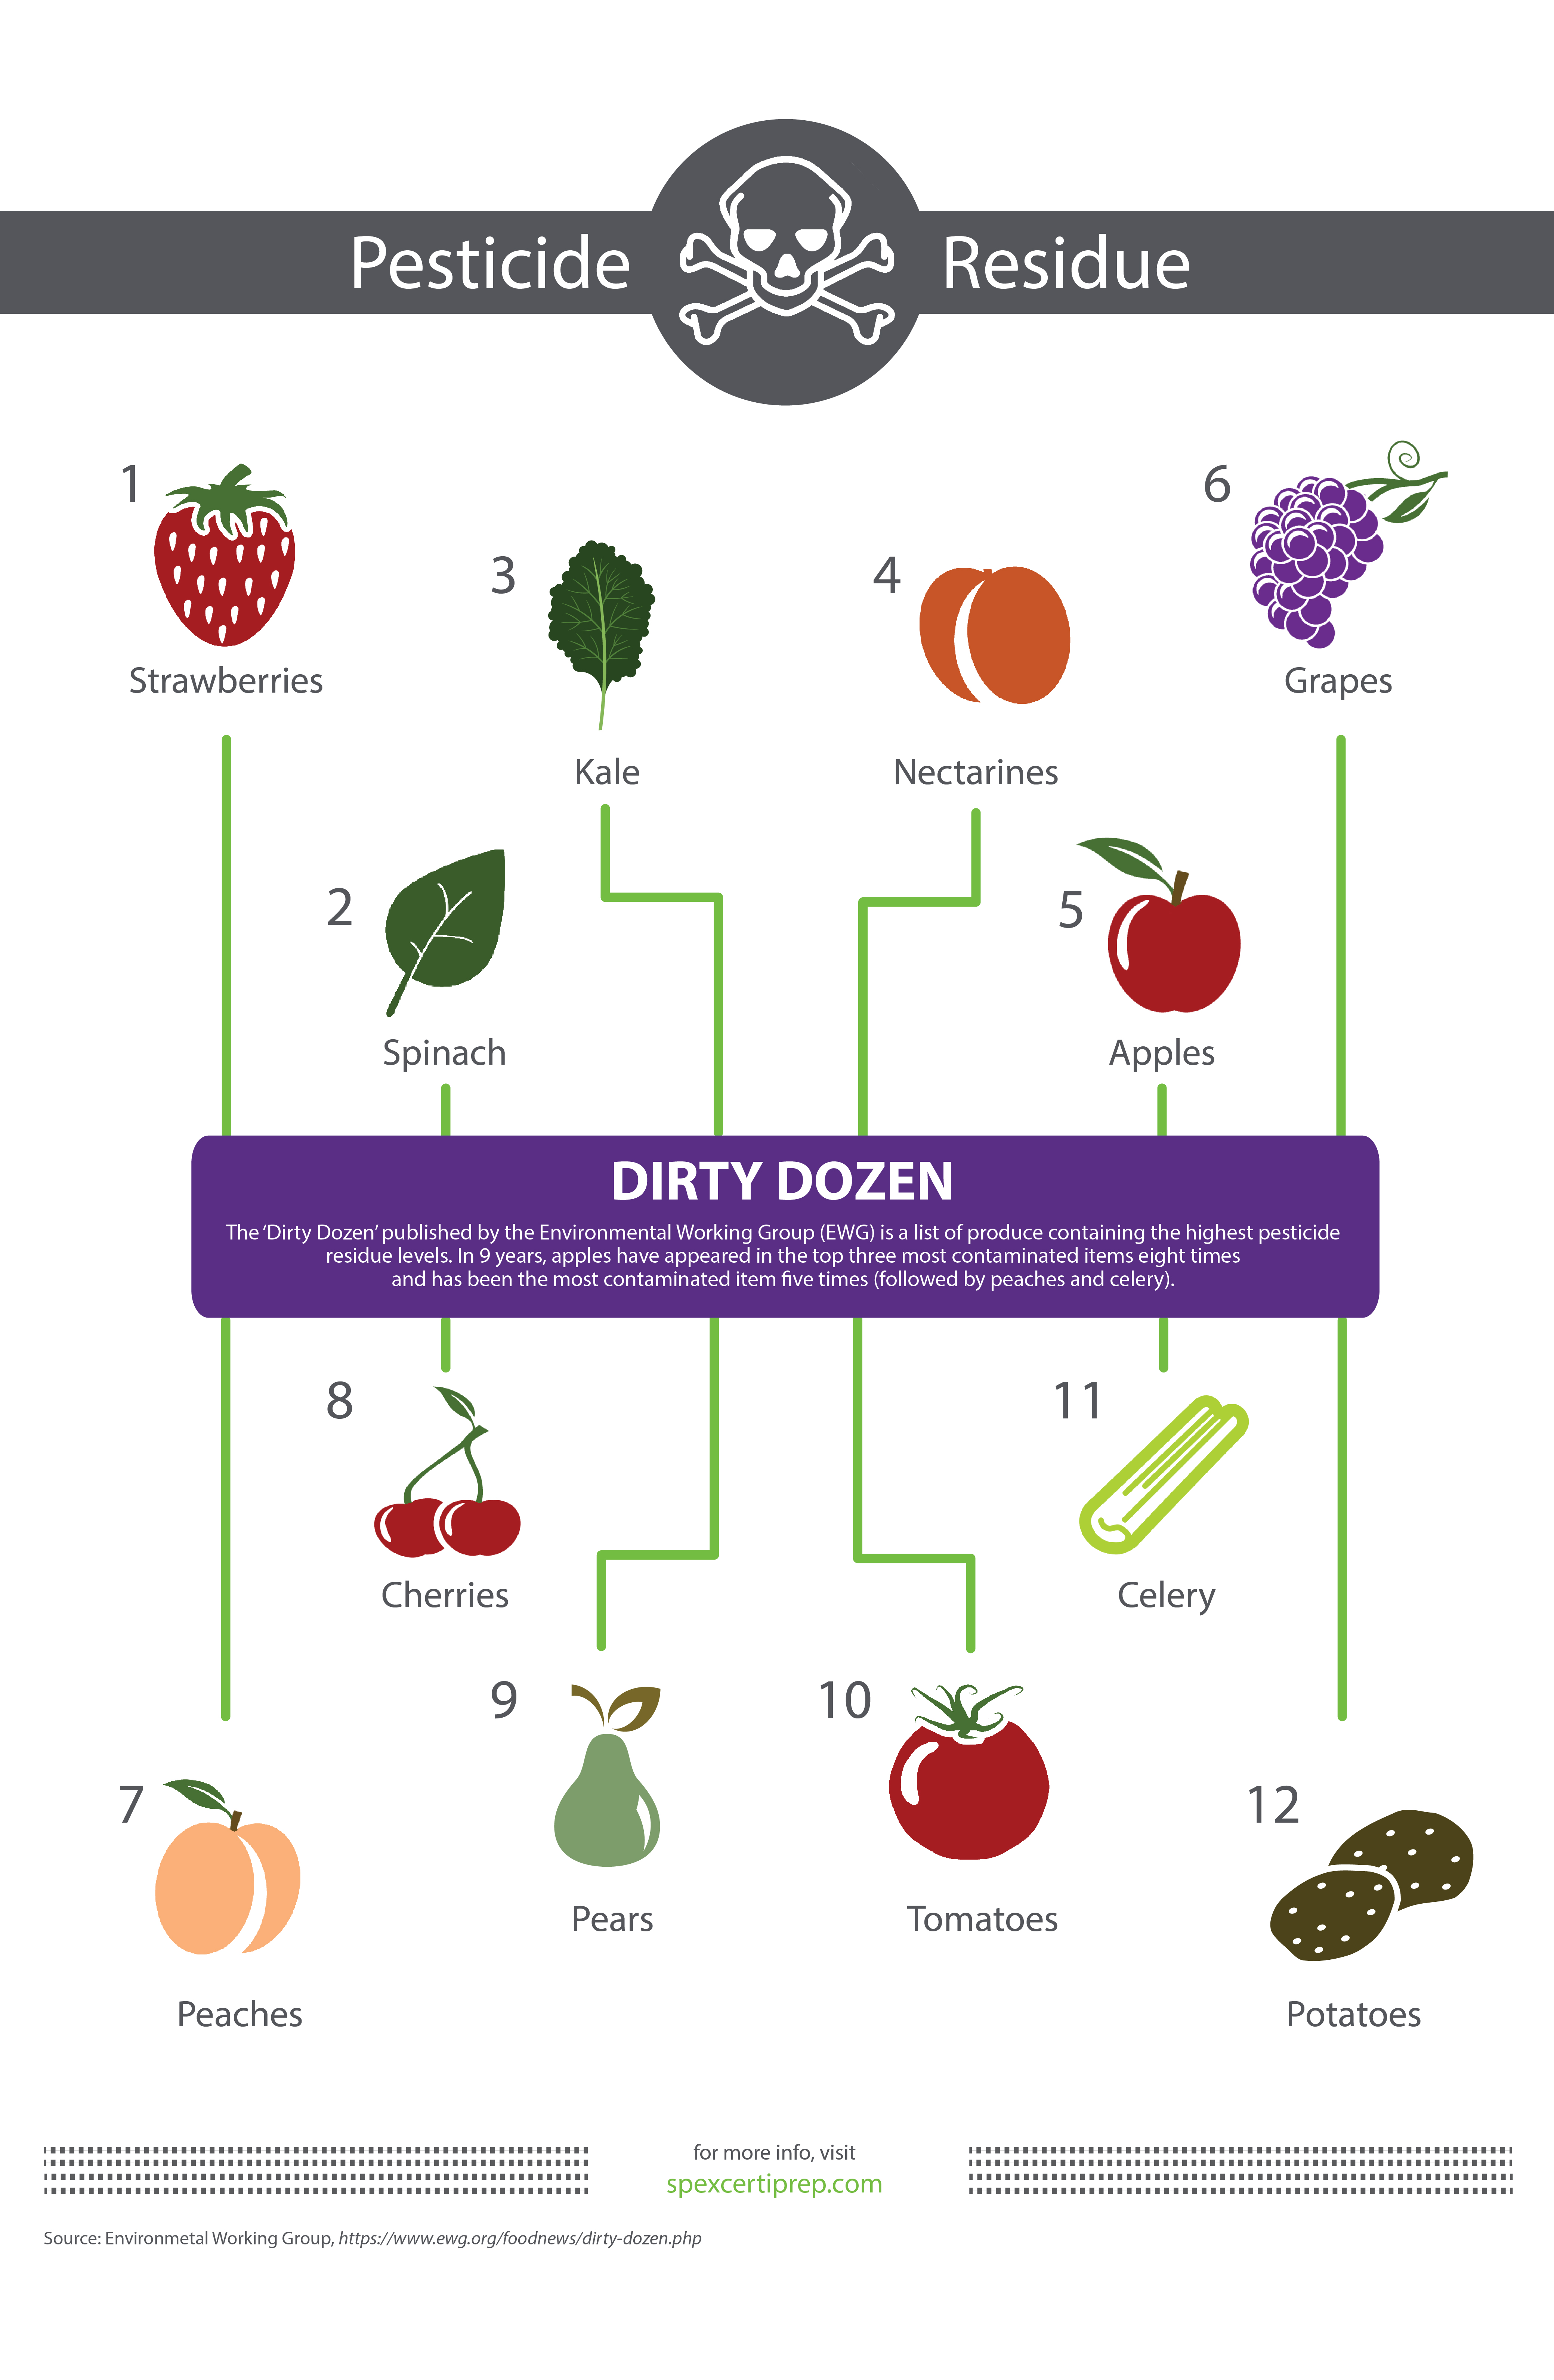 Pesticide-Residue-Infographic-Dirty Dozen-2020-01